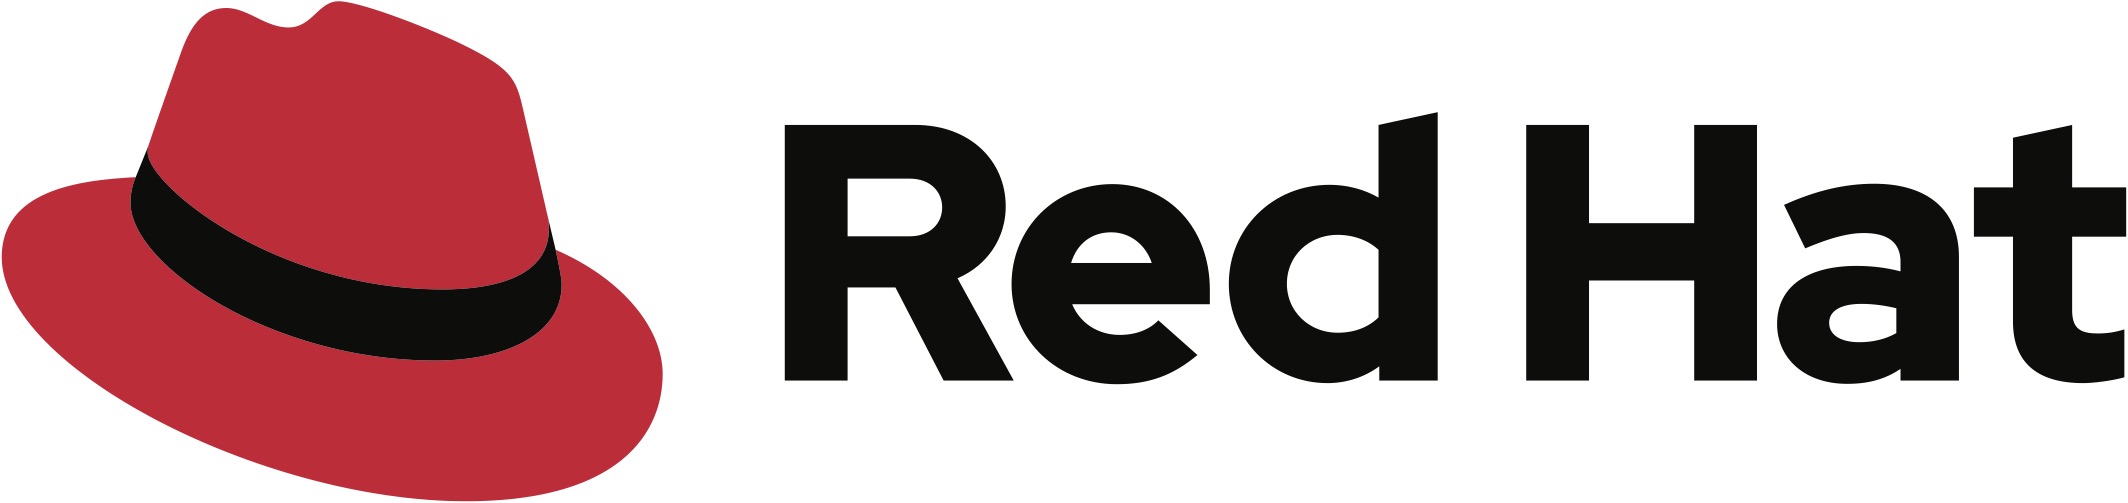 Red Hat logo